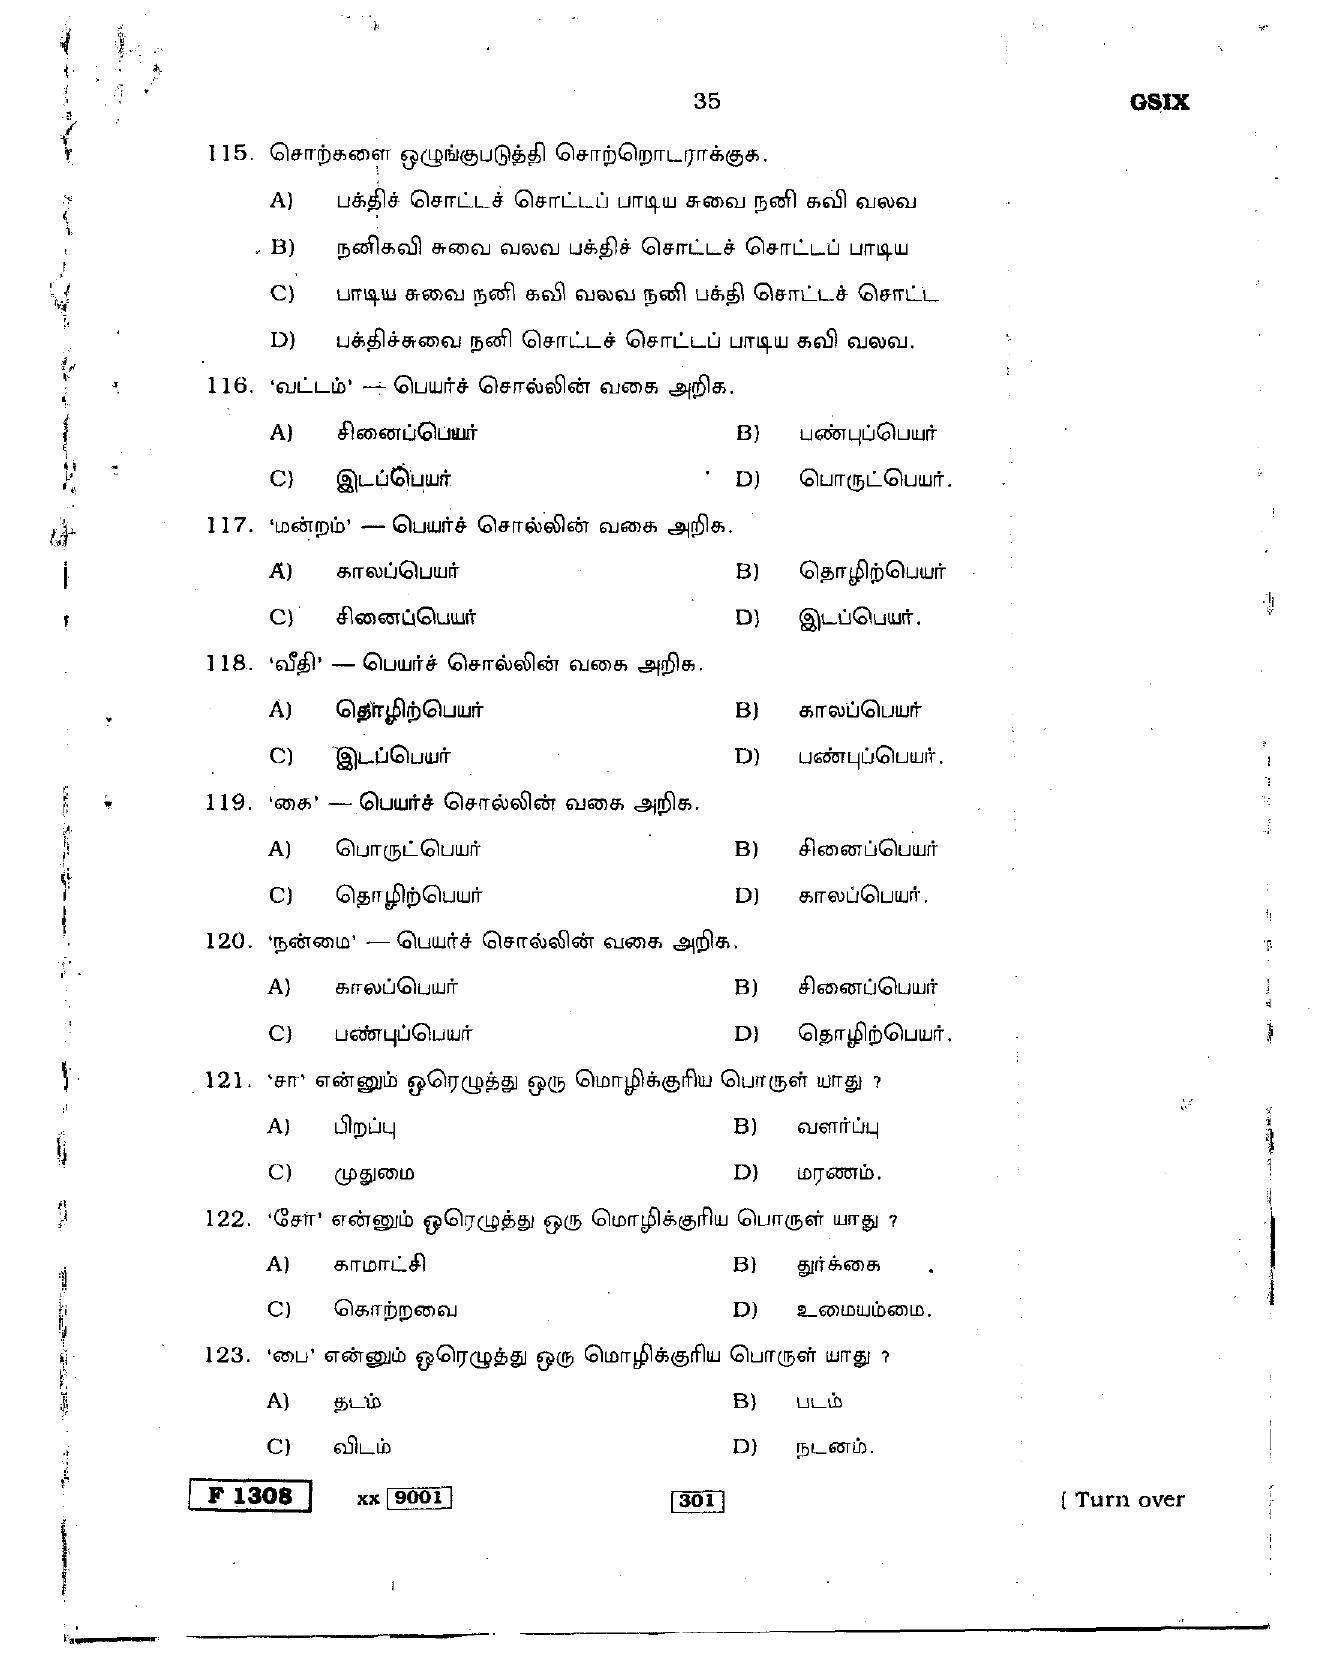 Delhi High Court Junior Judicial Assistant General Knowledge Previous Question Paper - Page 46